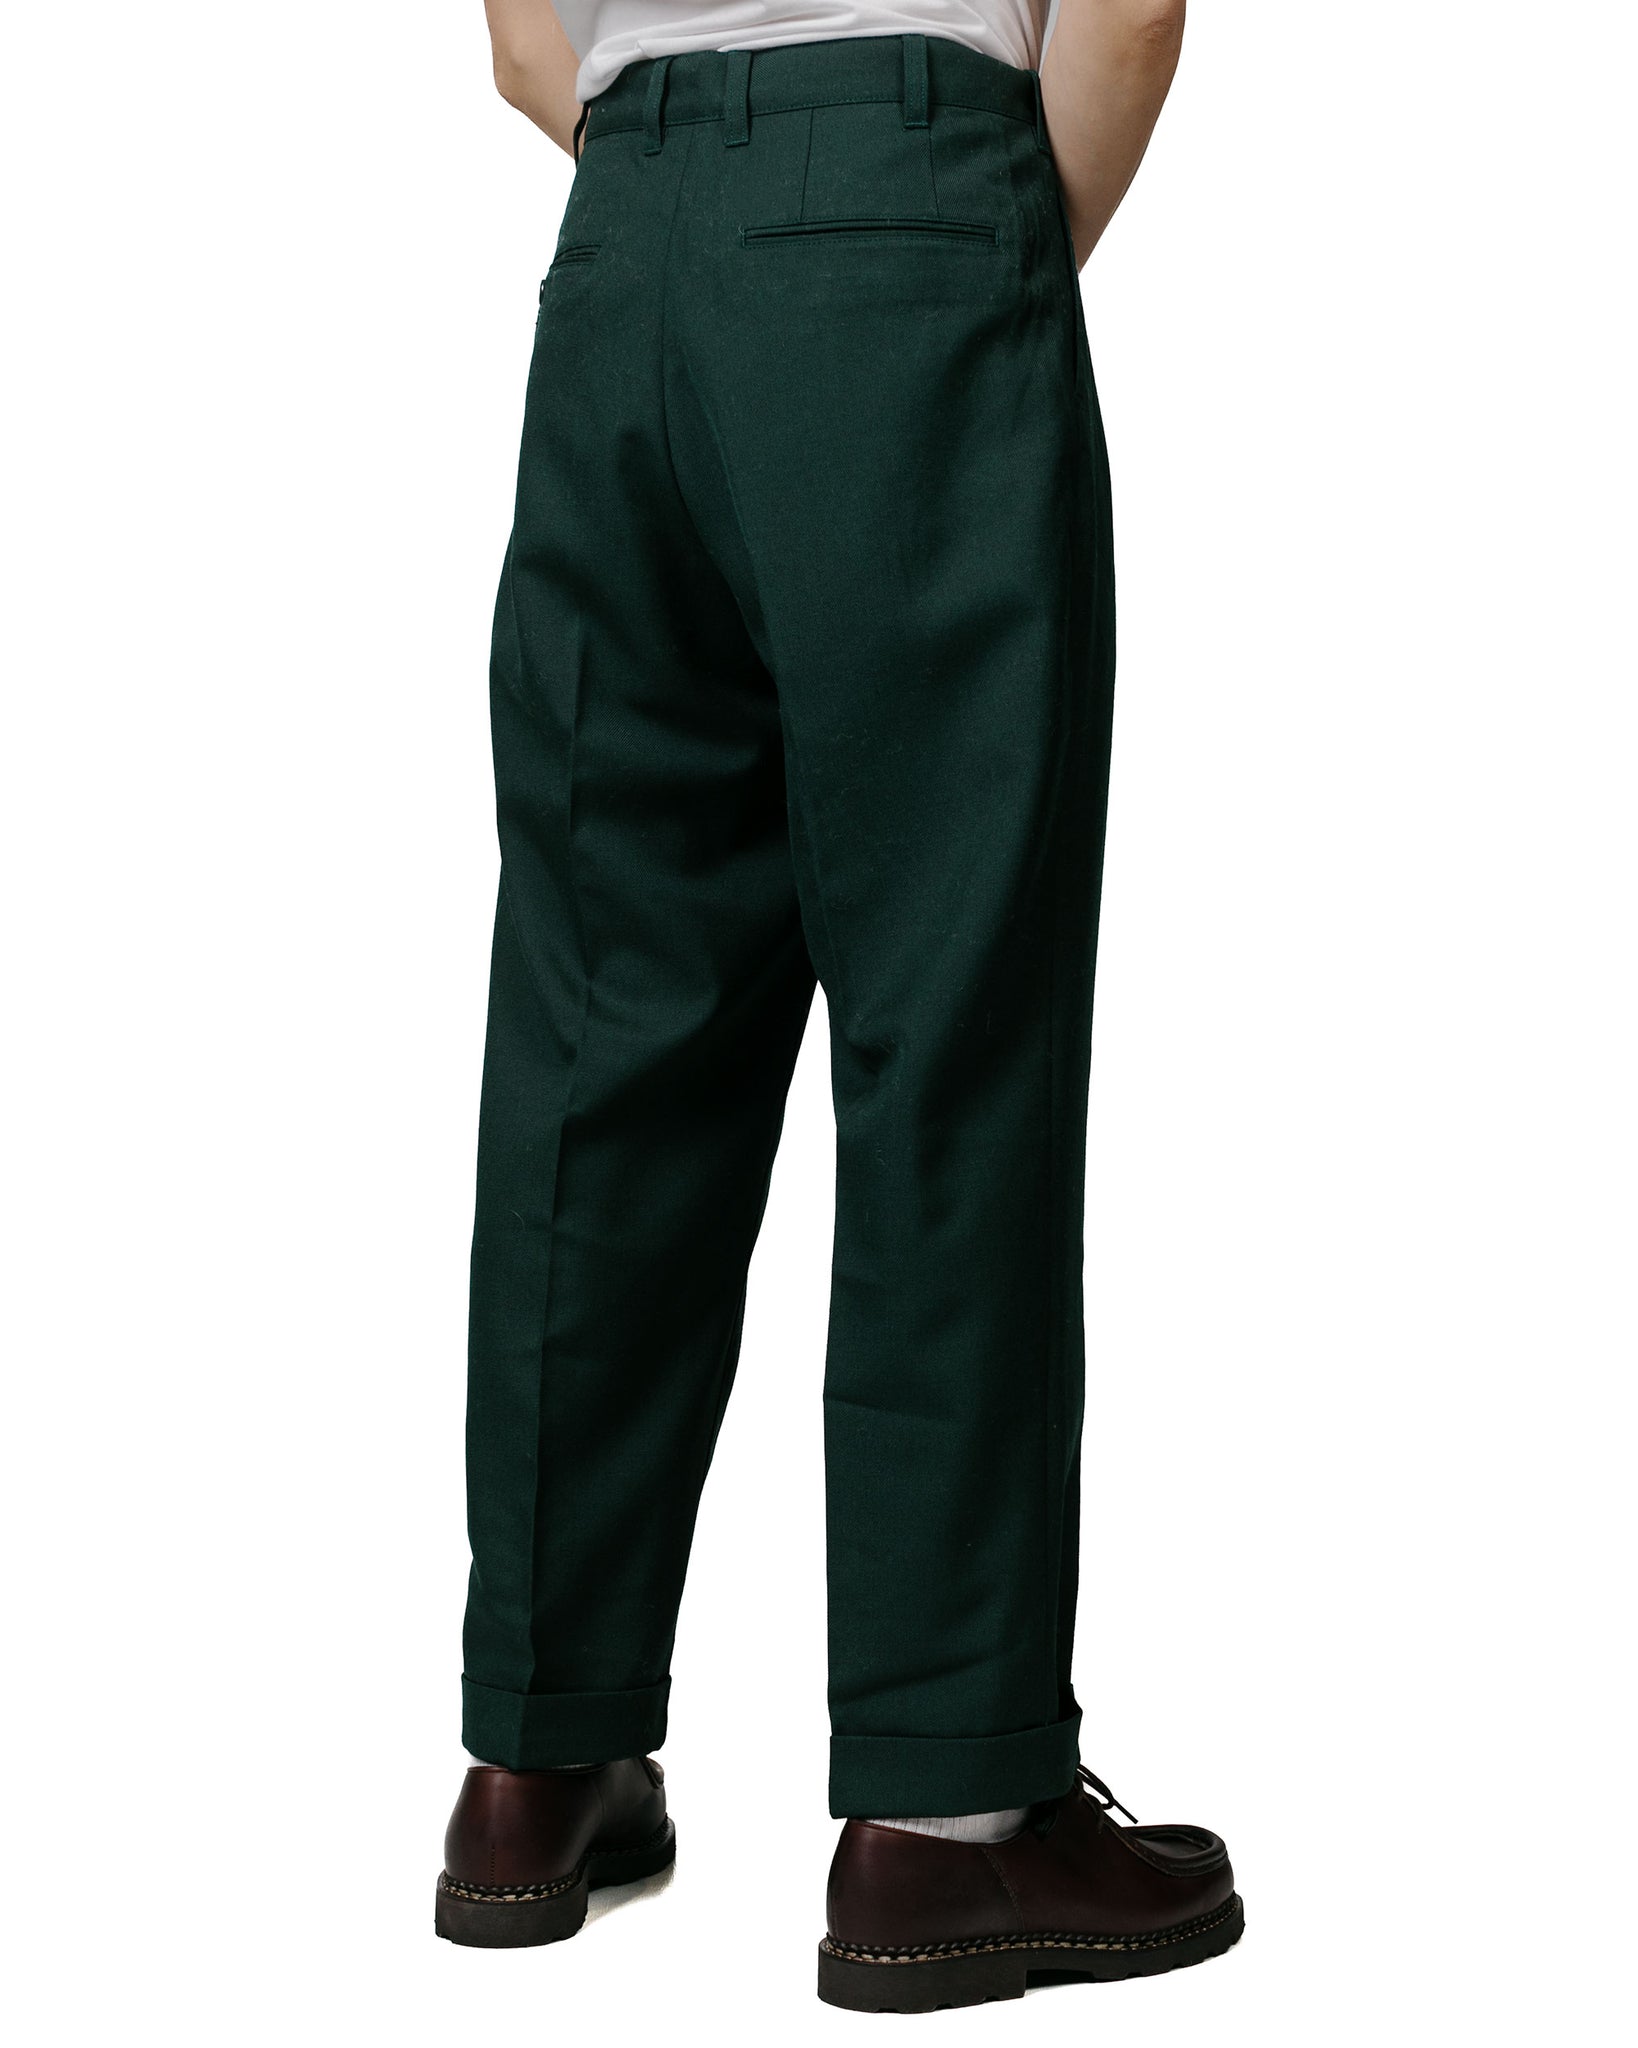 Beams Plus 2Pleats Uniform Serge Green